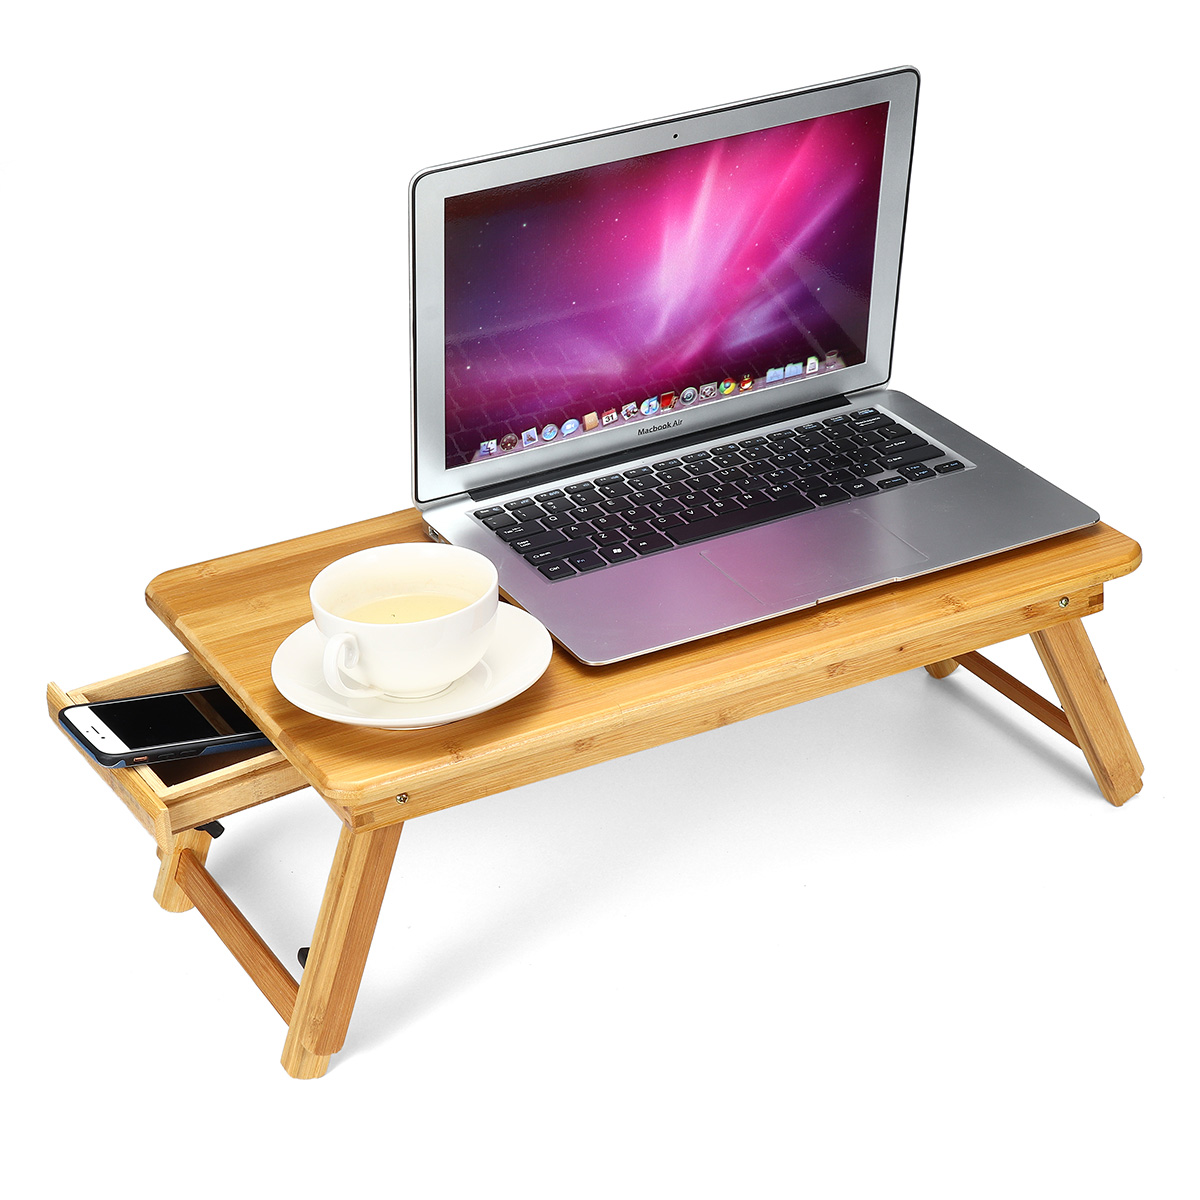 Adjustable-Laptop-Desk-Large-Bed-Tray-Tilting-Top-Foldable-Table-Multi-tasking-Stand-Breakfast-Servi-1547679-7